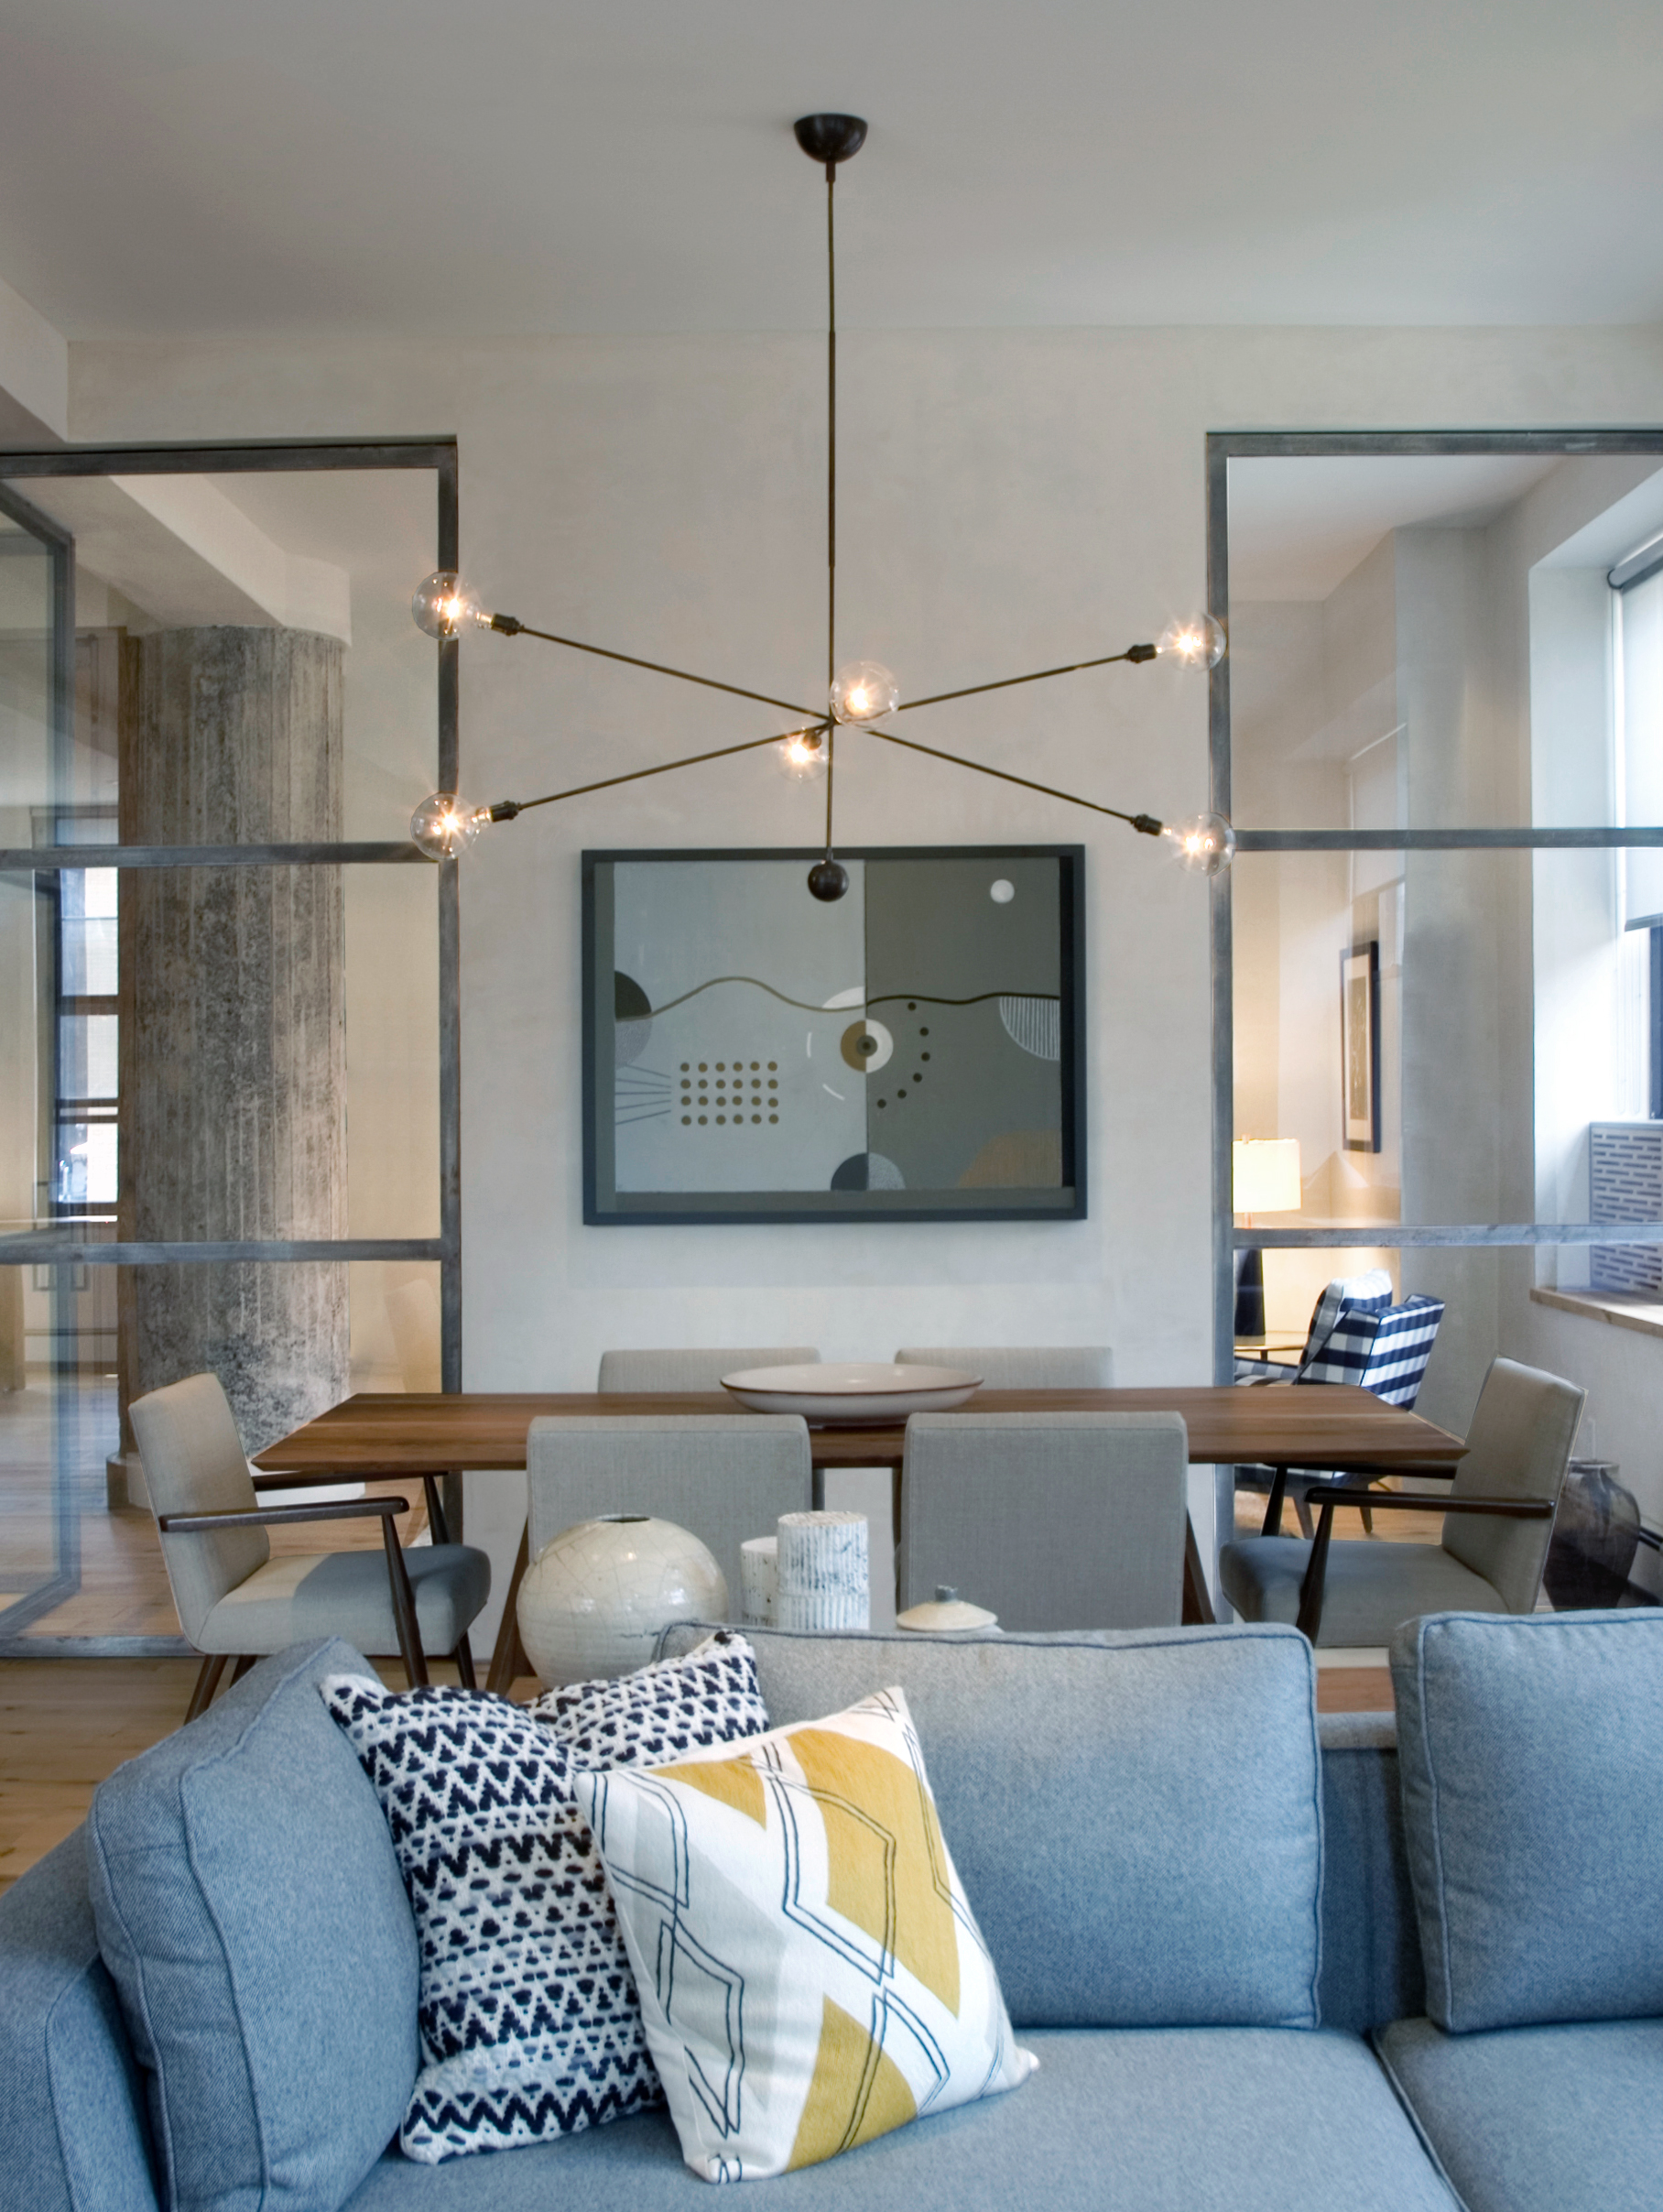 SoHo loft contemporary living room and dining room interior design by Jones Rowan Studio.